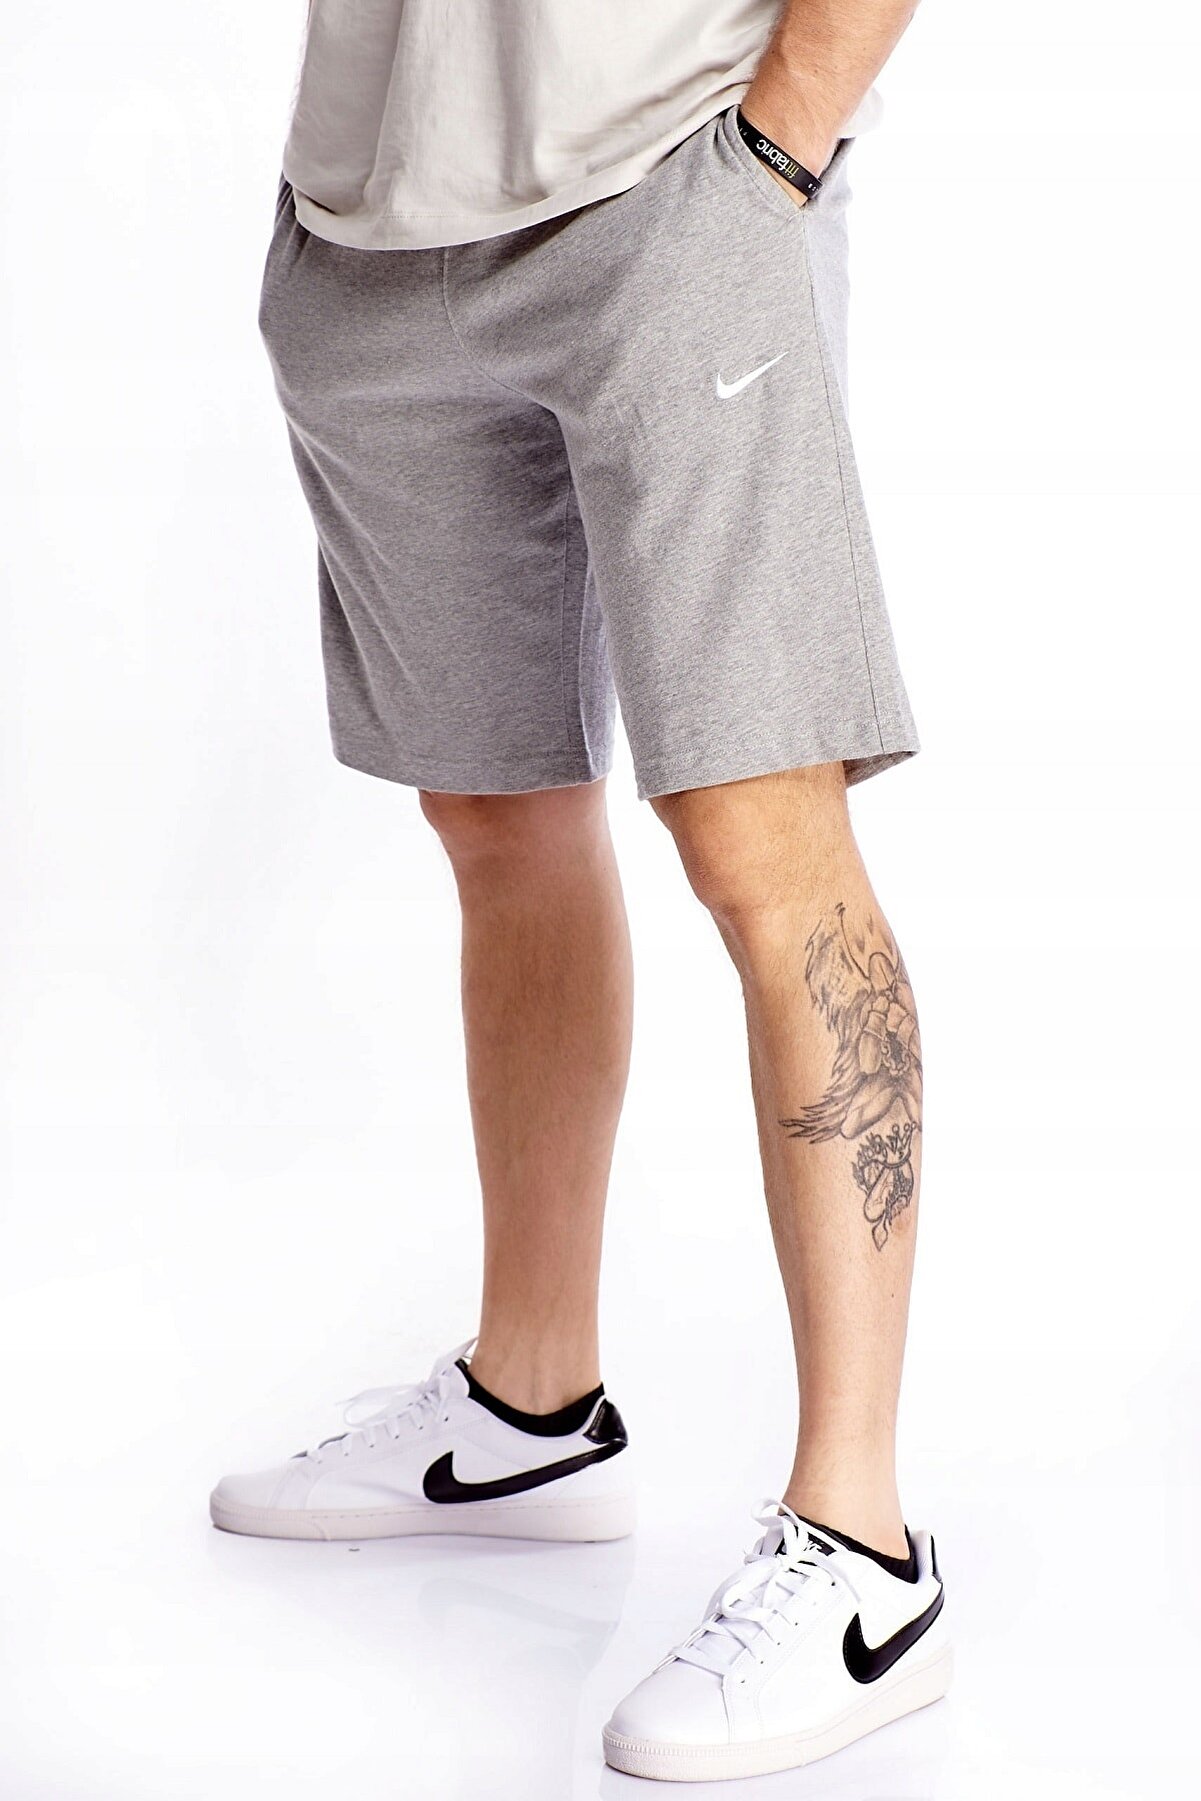 Nike Sportswear Ince Erkek Şortu Gri